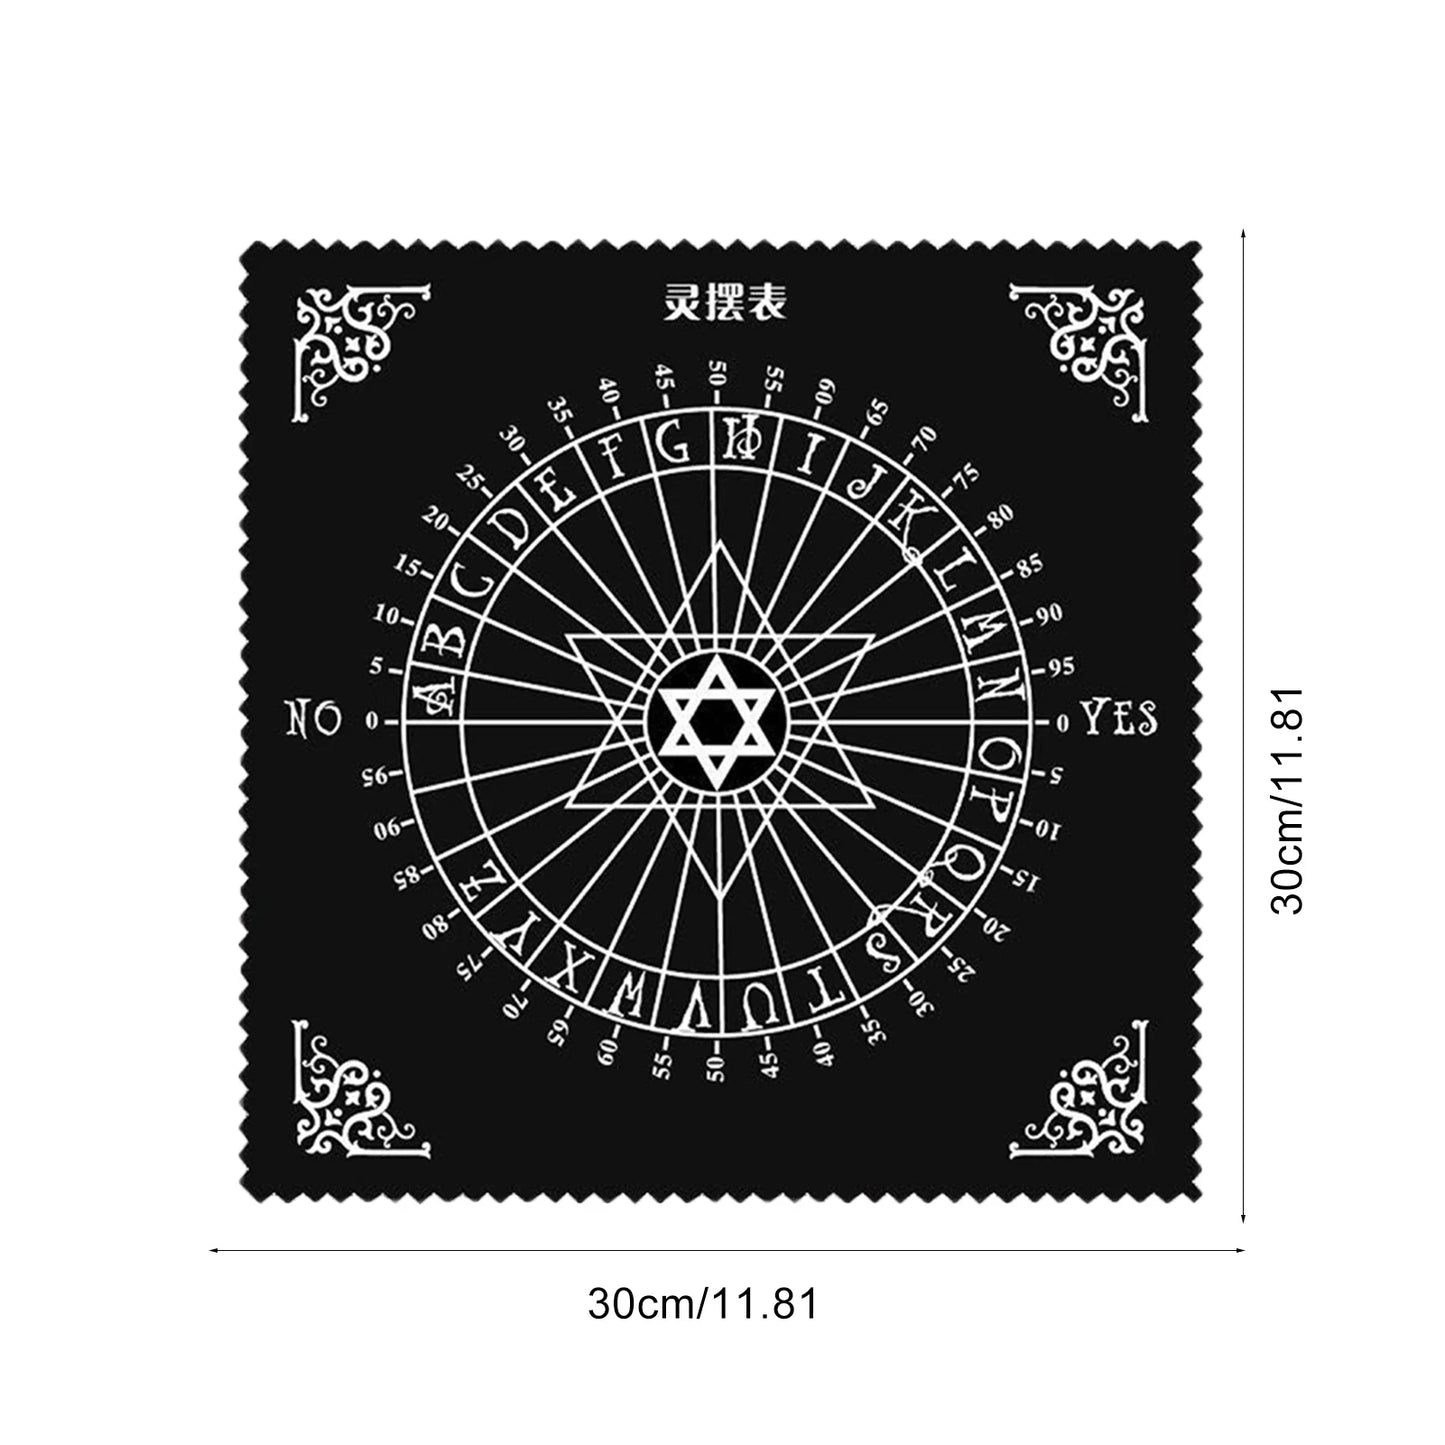 Assorted Velvet Tarot Card Divination Tablecloths - CosmicSerenityShop